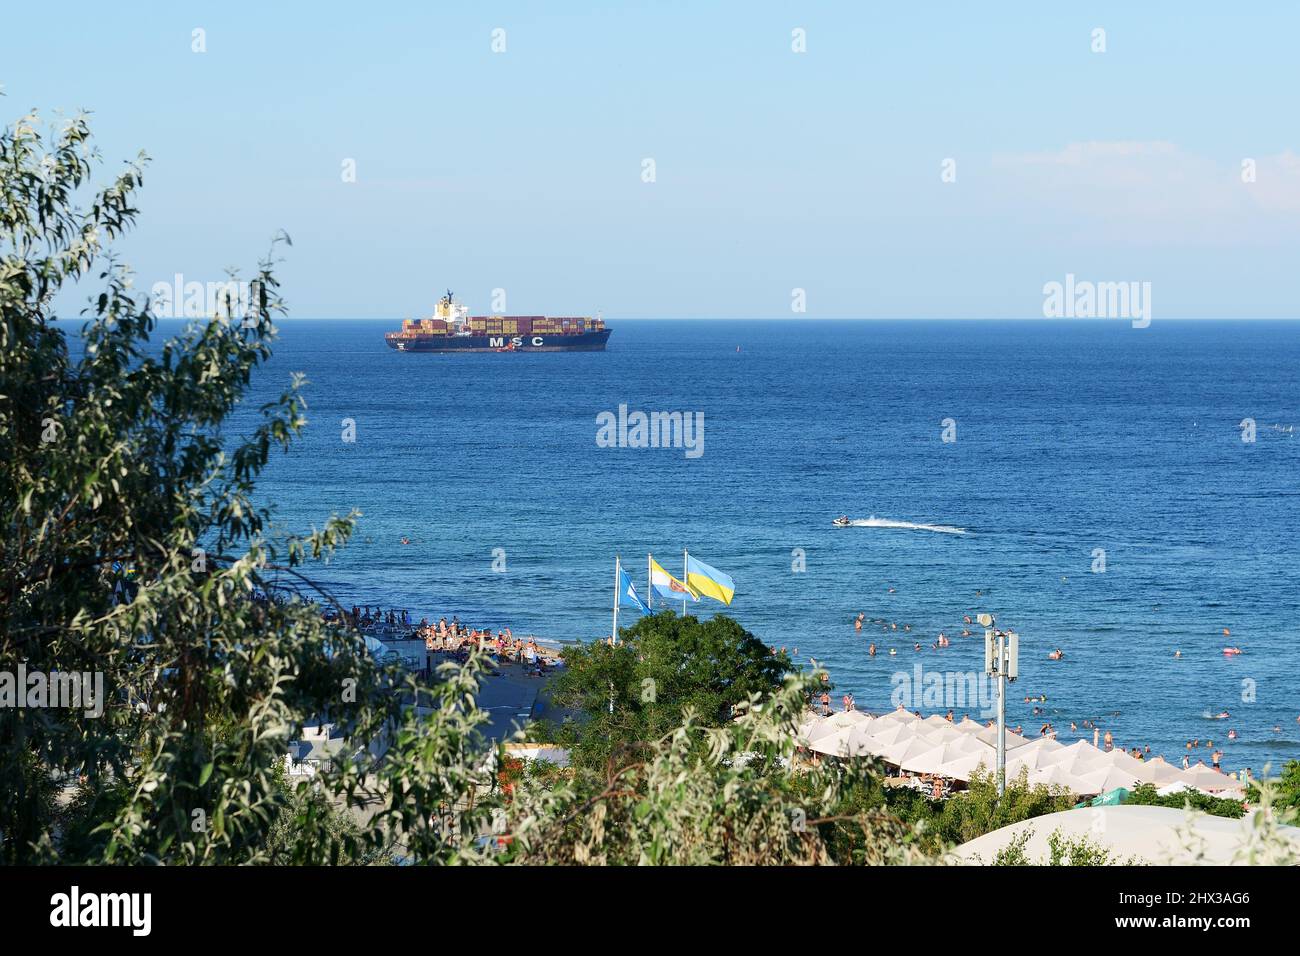 CHORNOMORSK, UKRAINE - AUGUST 9: The container ship transportation from Chornomorsk port and beach with Ukraininan flag on September 25, 2020 in Chorn Stock Photo